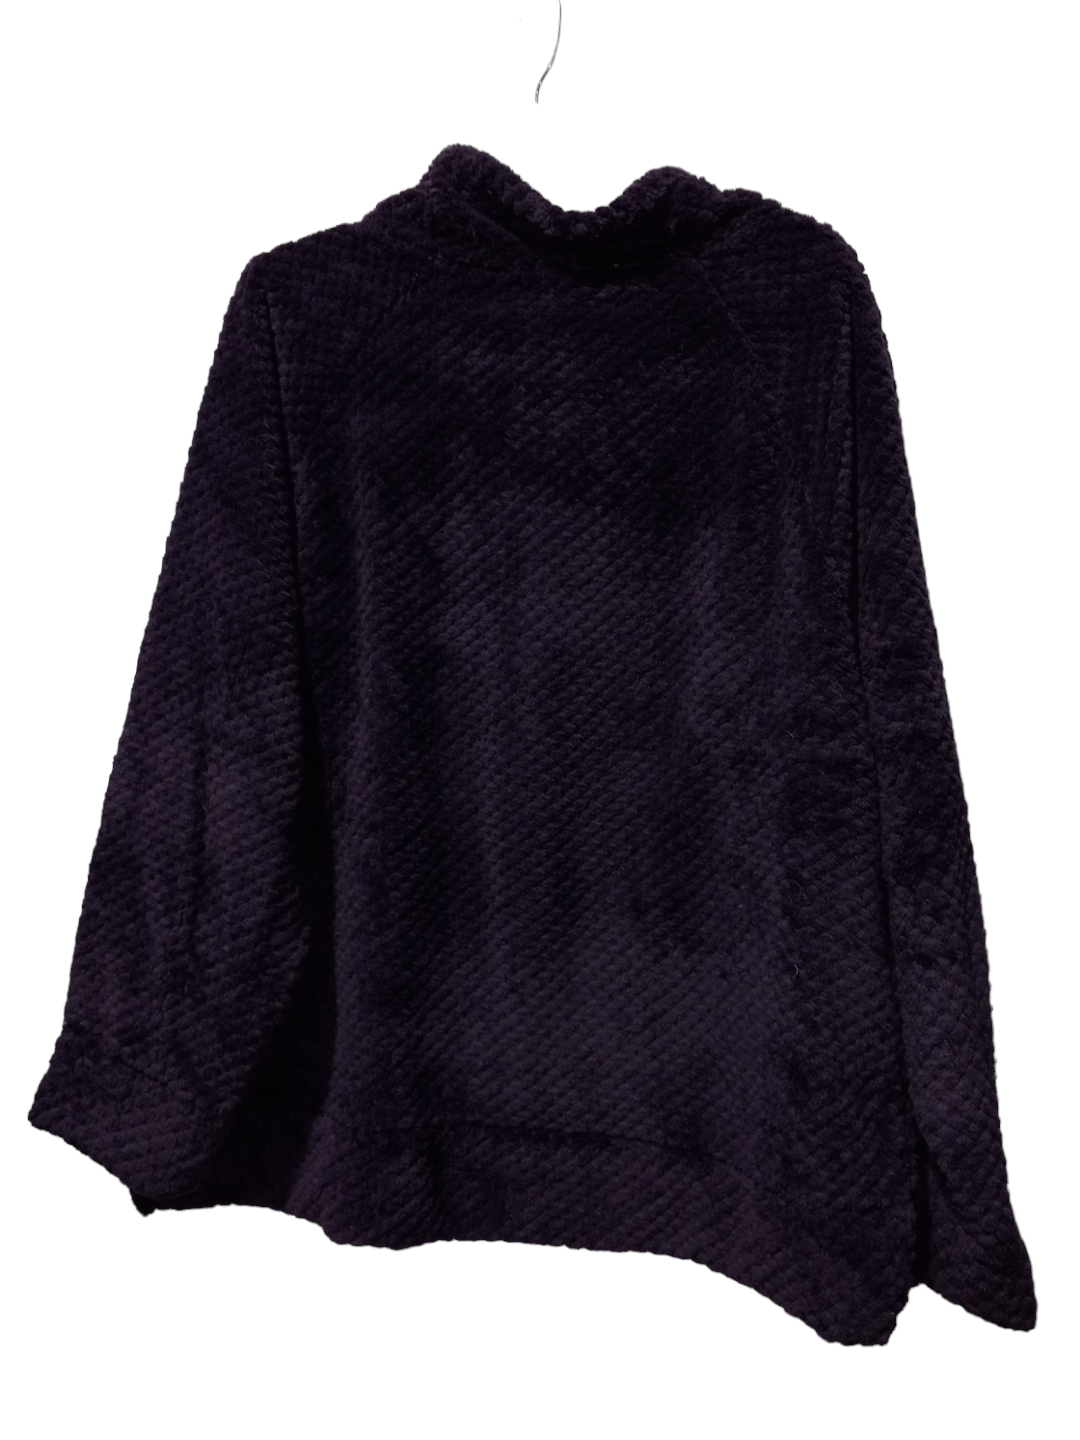 Purple Sweatshirt Collar Members Mark, Size 2x